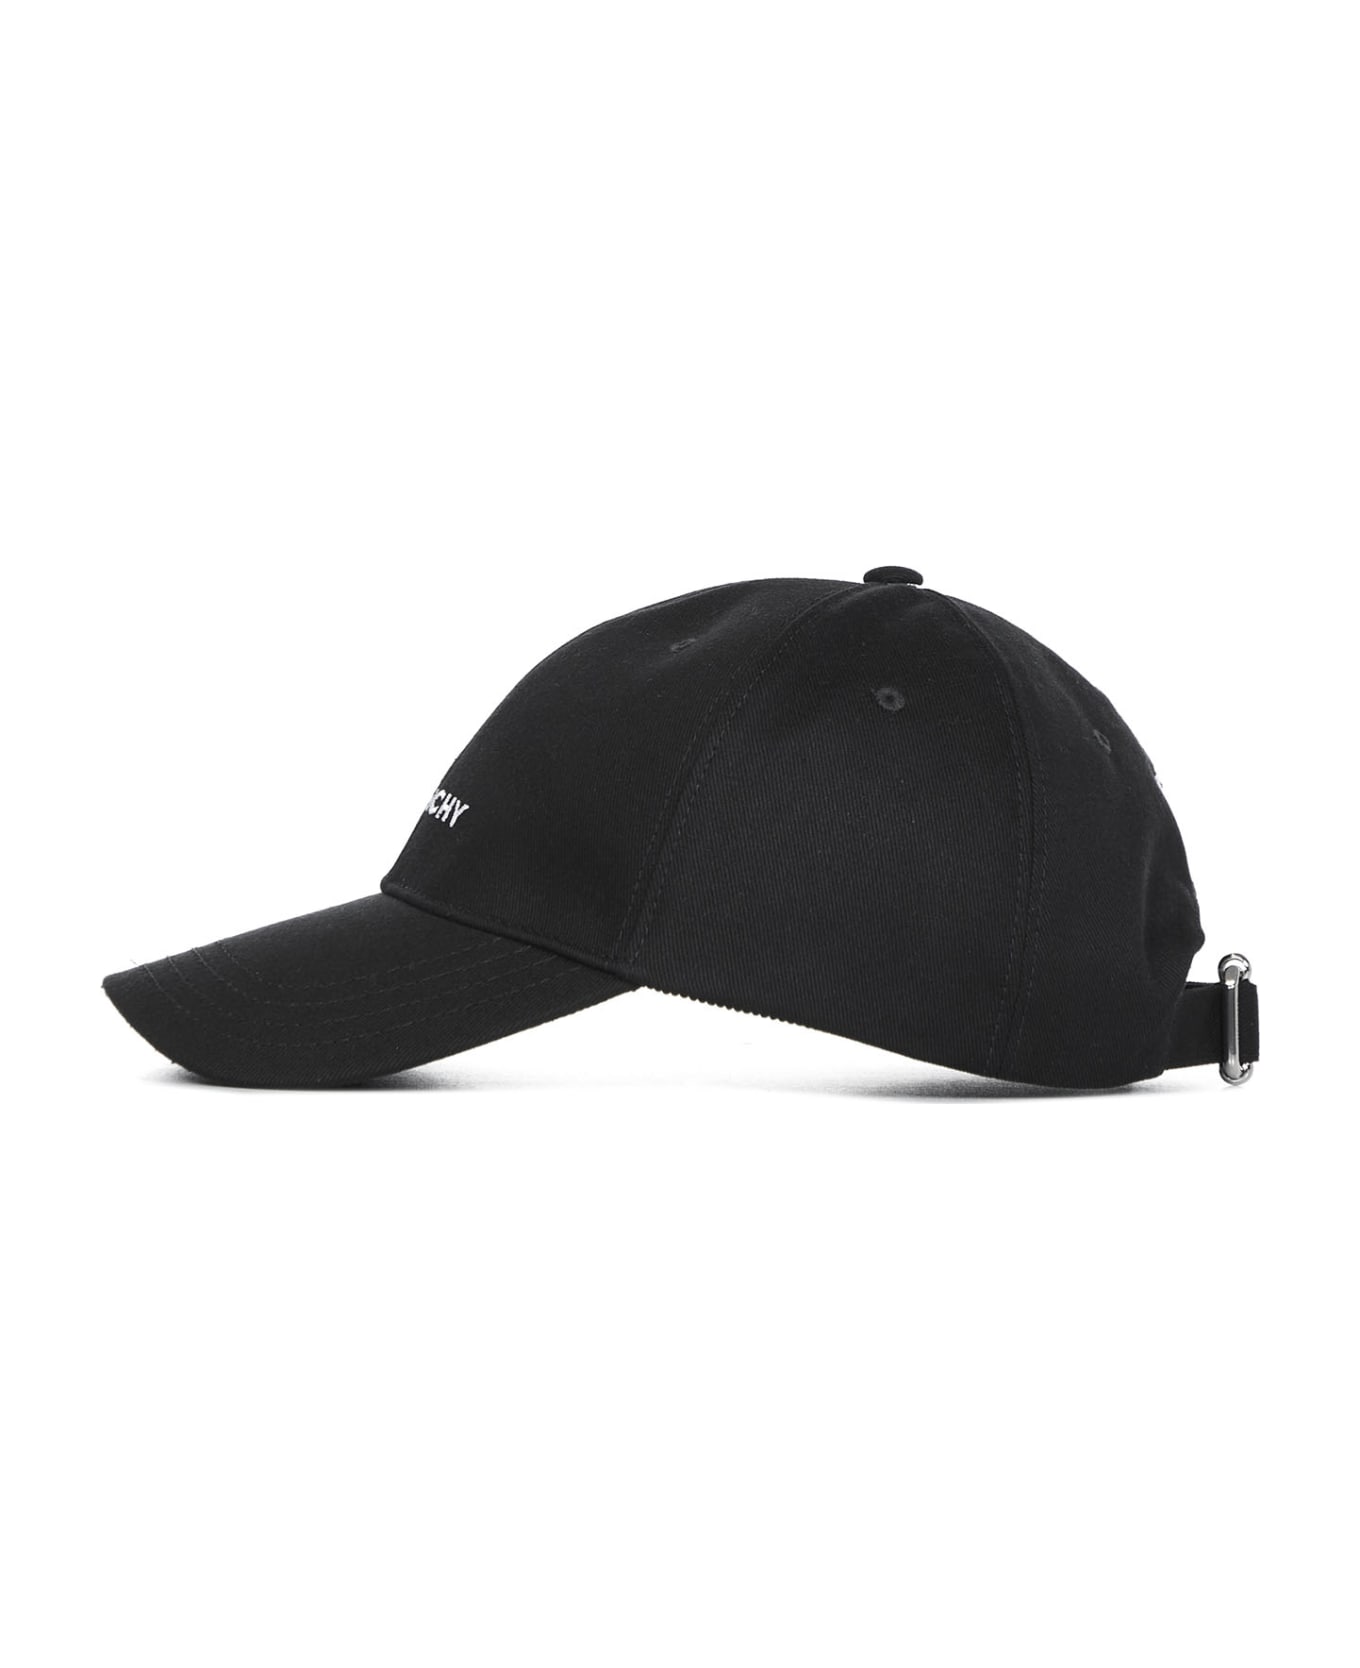 Givenchy Cap - Black